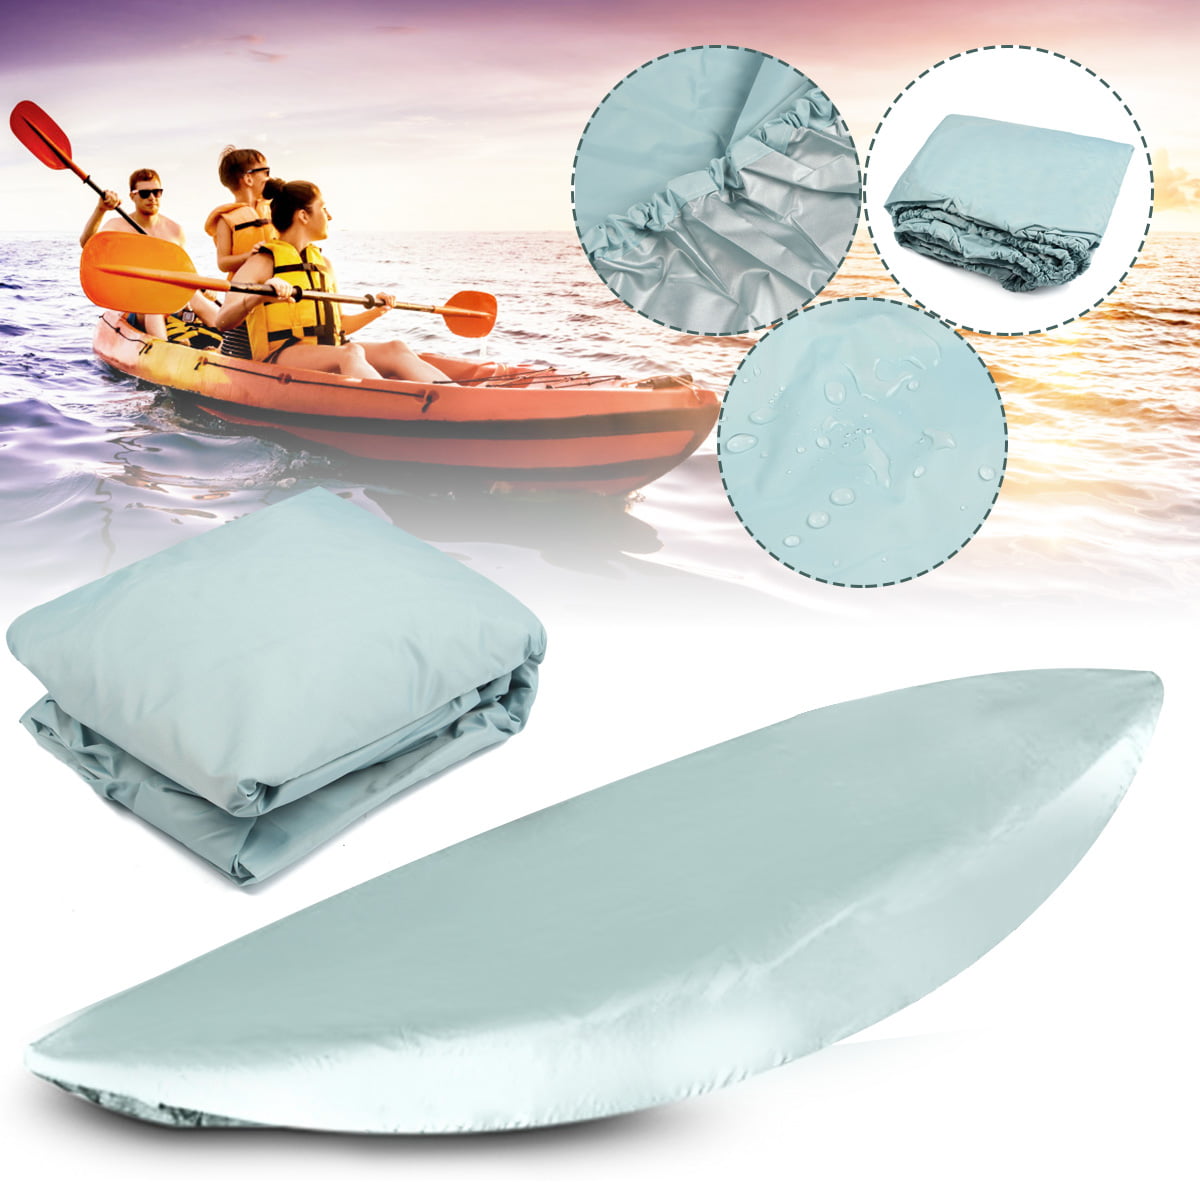 Walmeck Professional Universal Kayak Cover Canoe Boat Waterproof UV Resistant Dust Storage Cover Shield